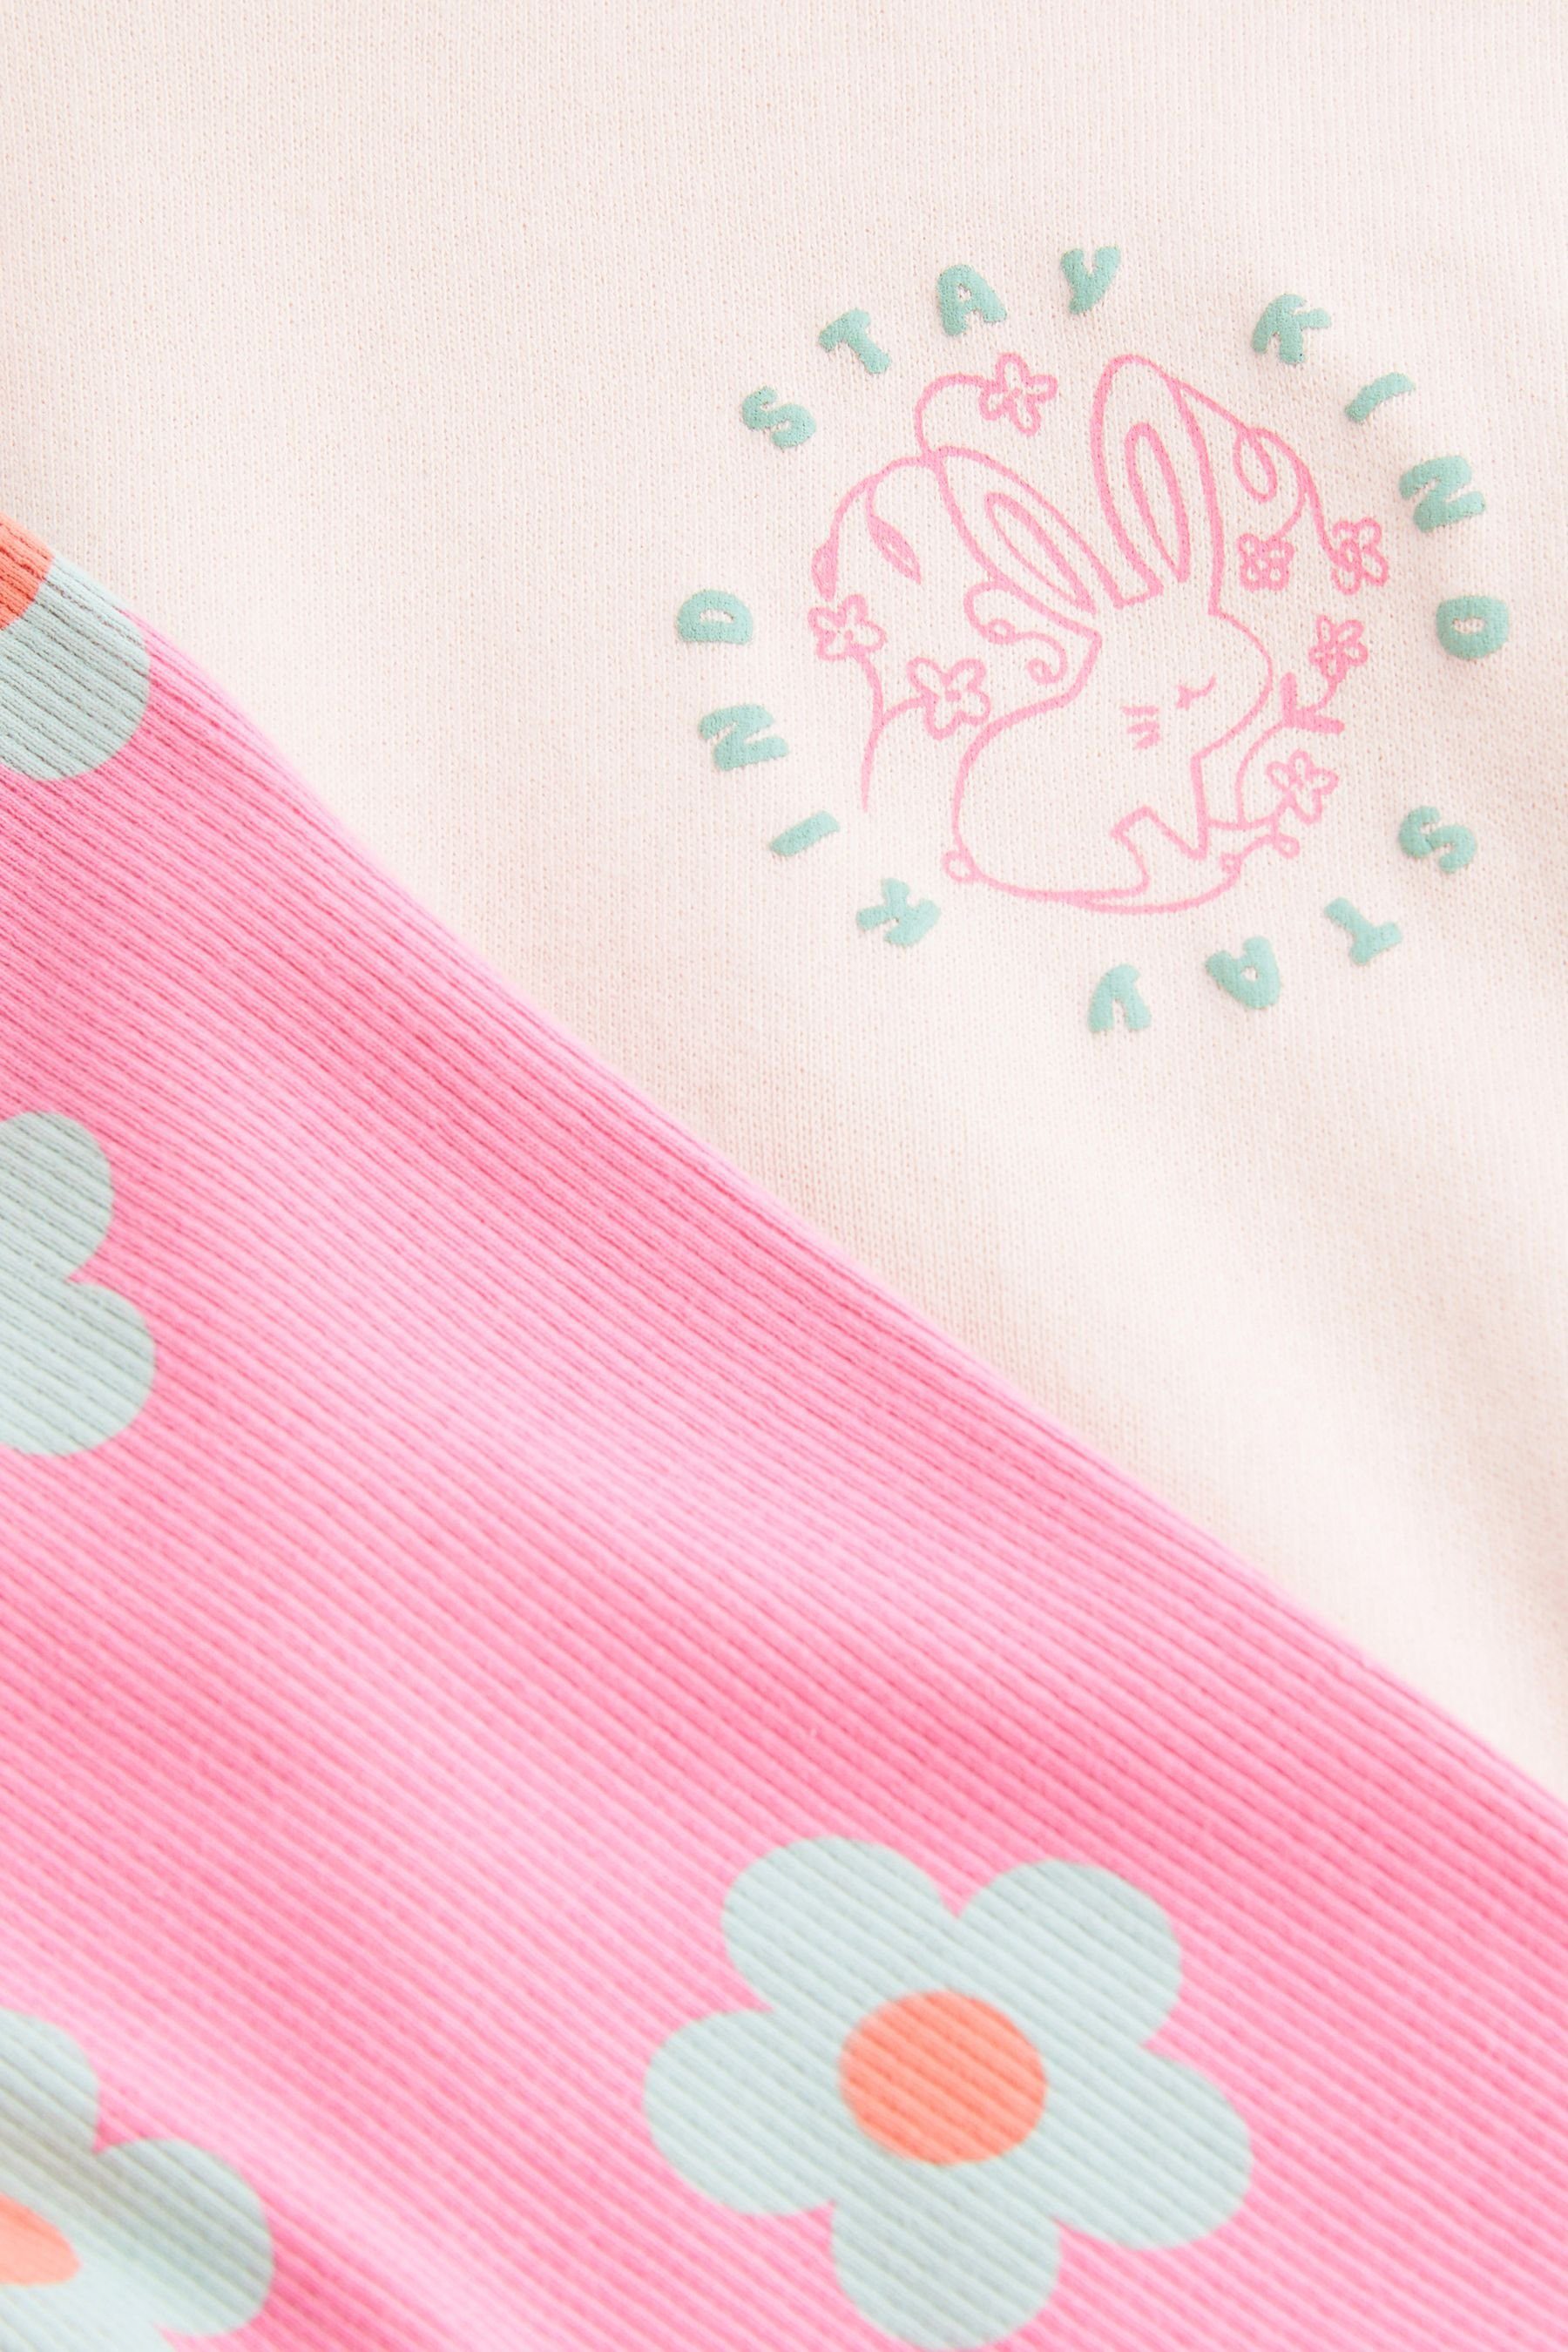 Next Shirt und im Leggings Pink Set Hoodie & Leggings (2-tlg)